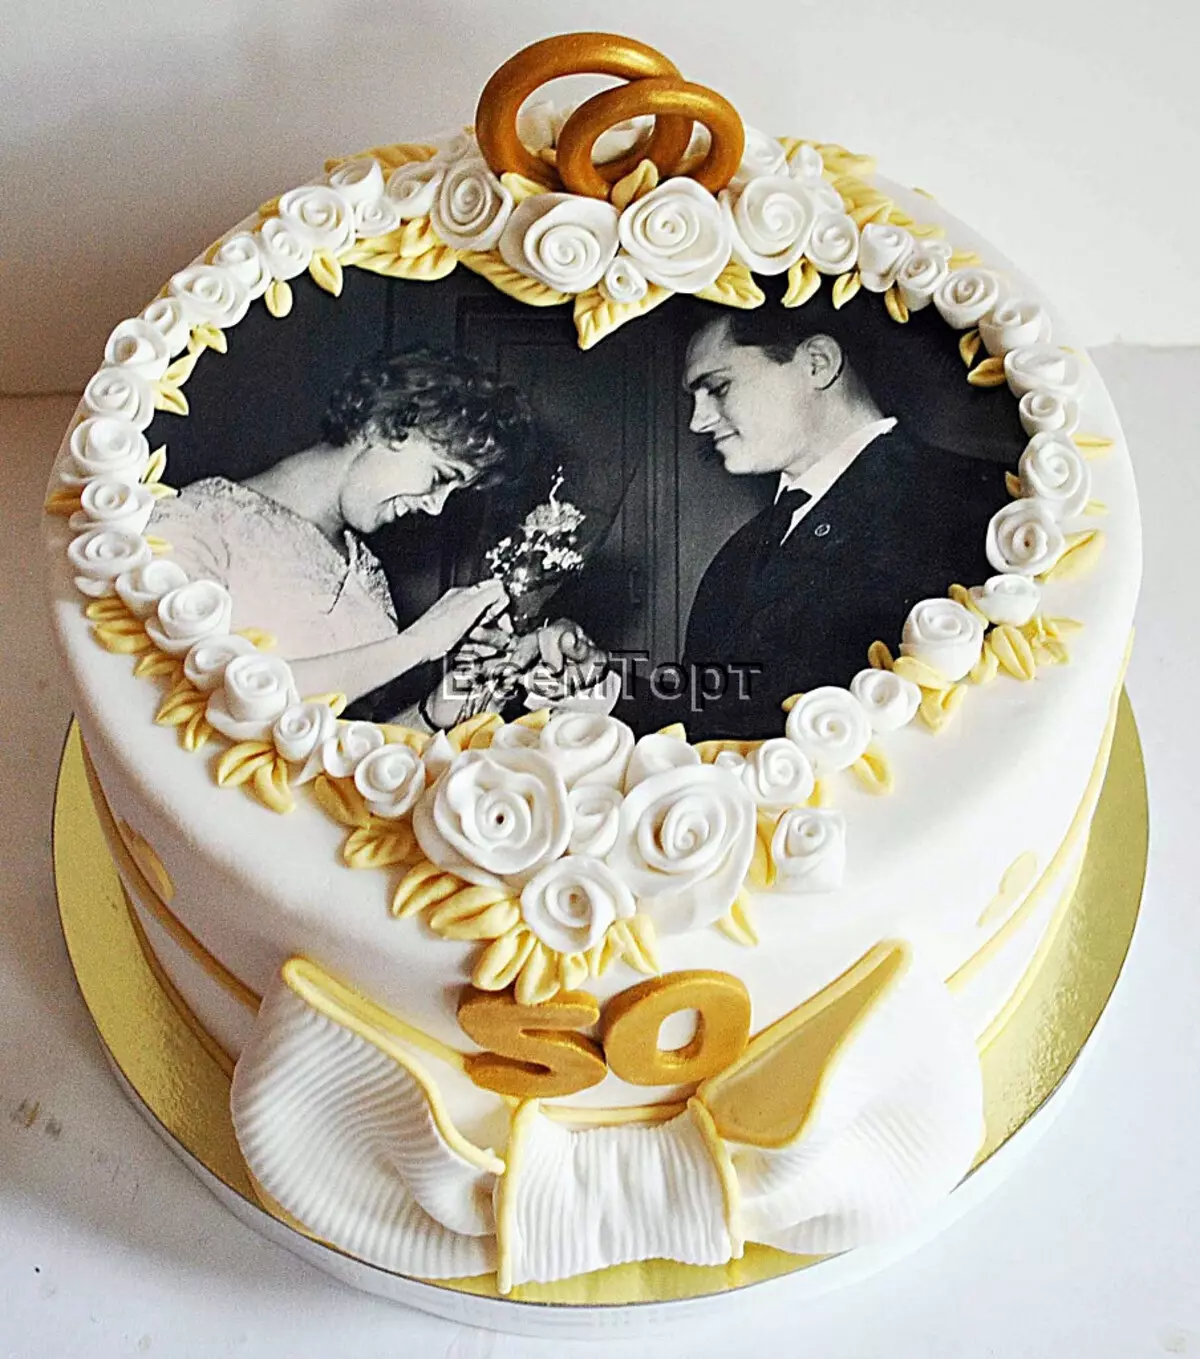 Торт на годовщину родителей. Торг на годовщину свадьбы. Торт на золотую свадьбу. Торт на юбилей свадьбы. Торт с фотографией.